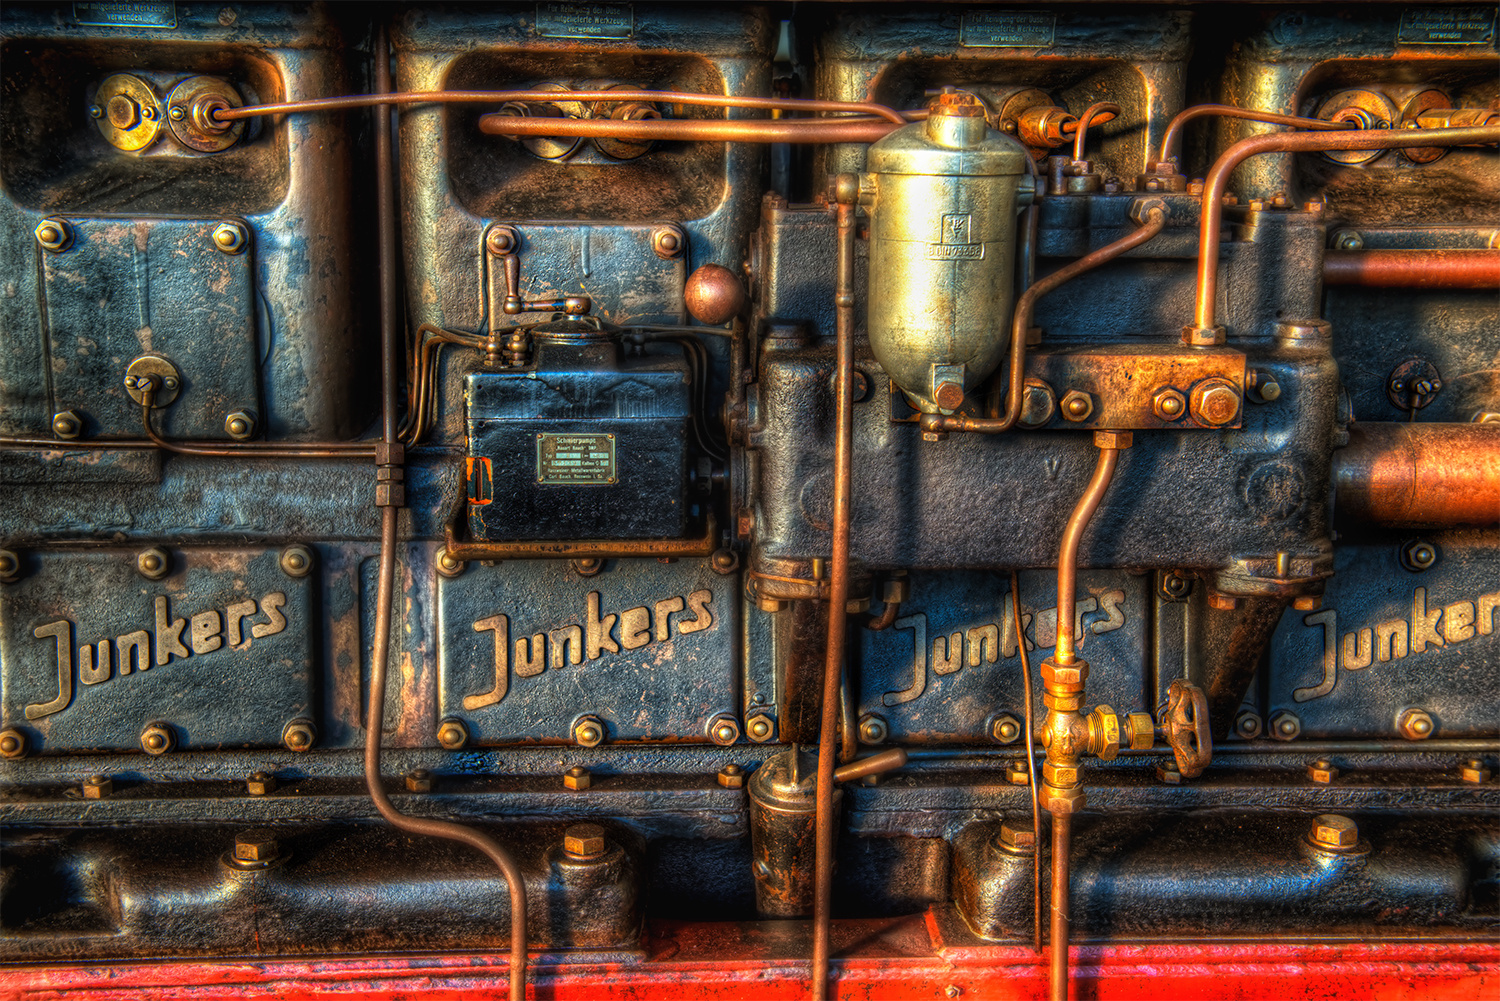 Junkers Motor